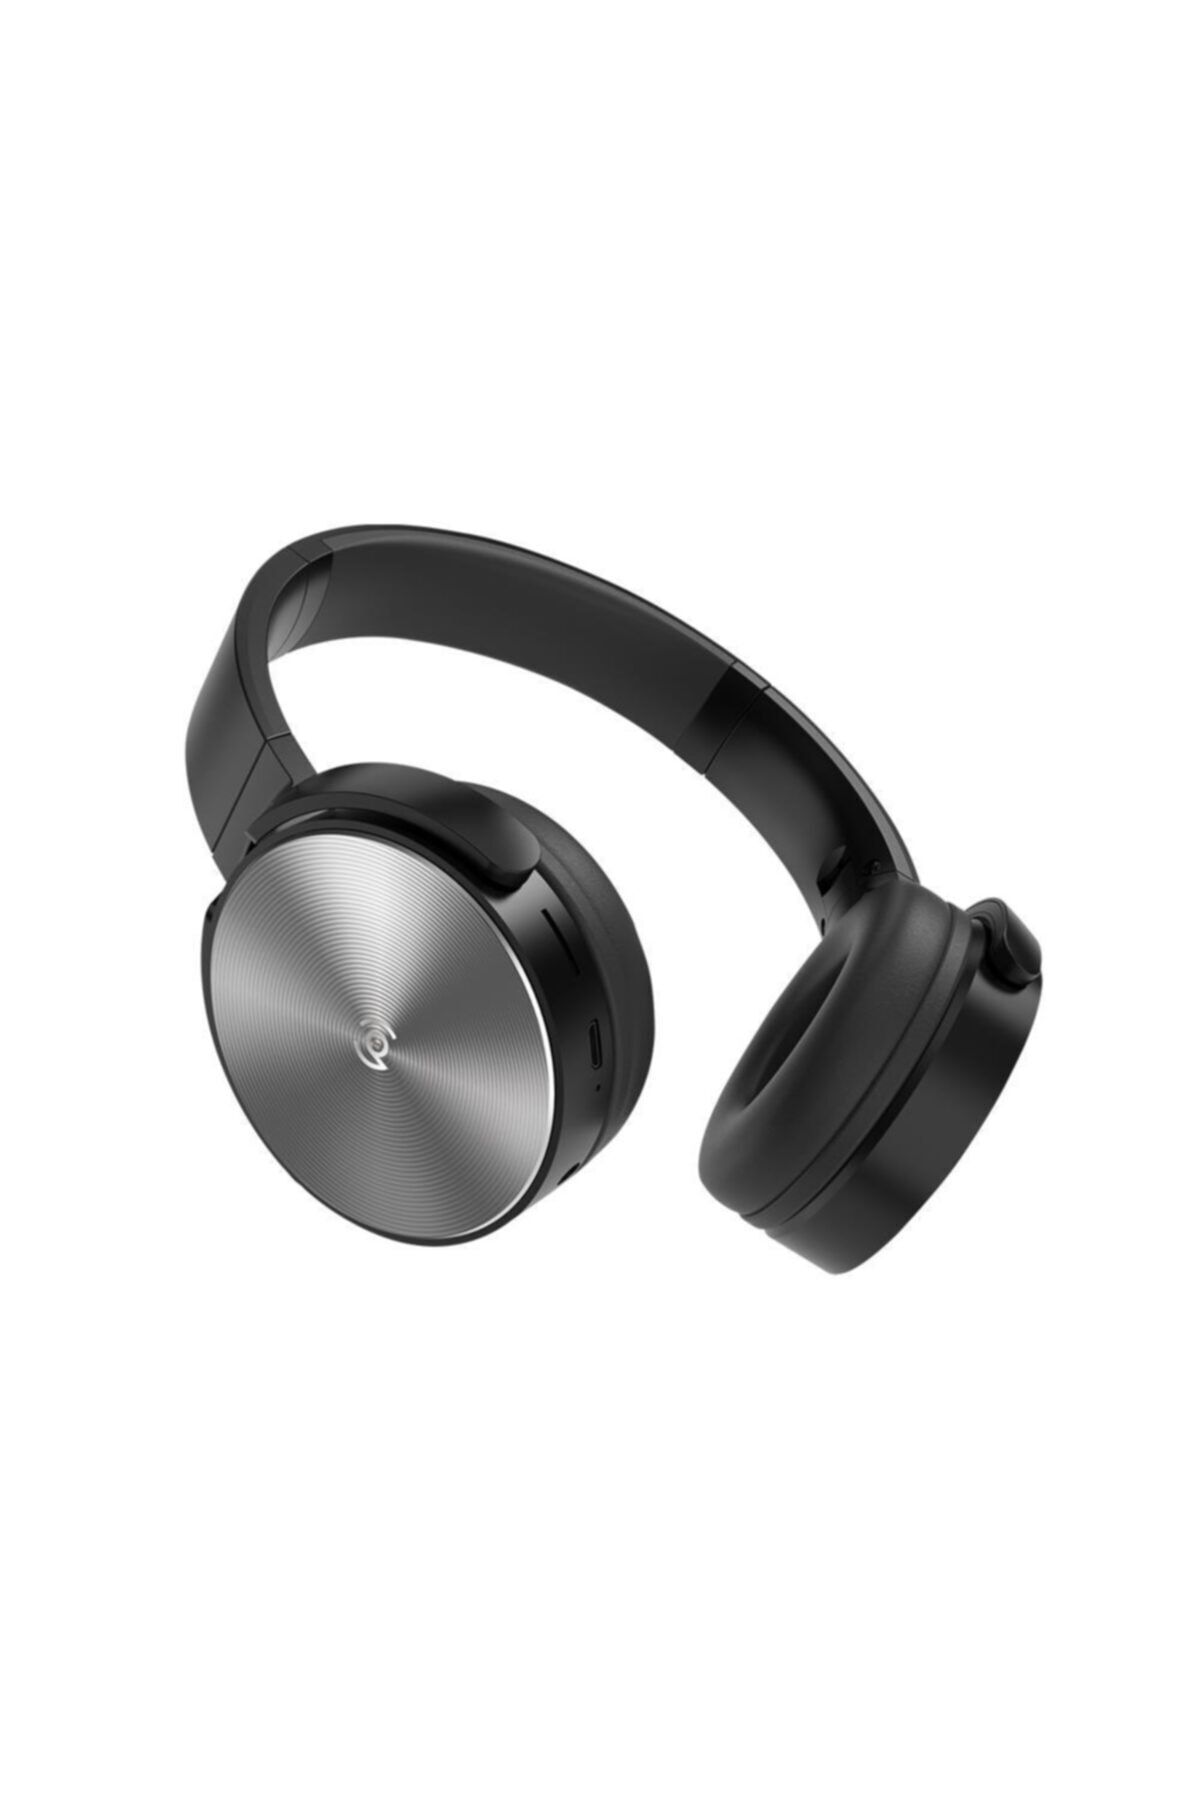 Polosmart Fs50 Let's Go Kablosuz Bluetooth 5.0 Kulaküstü Kulaklık Gri